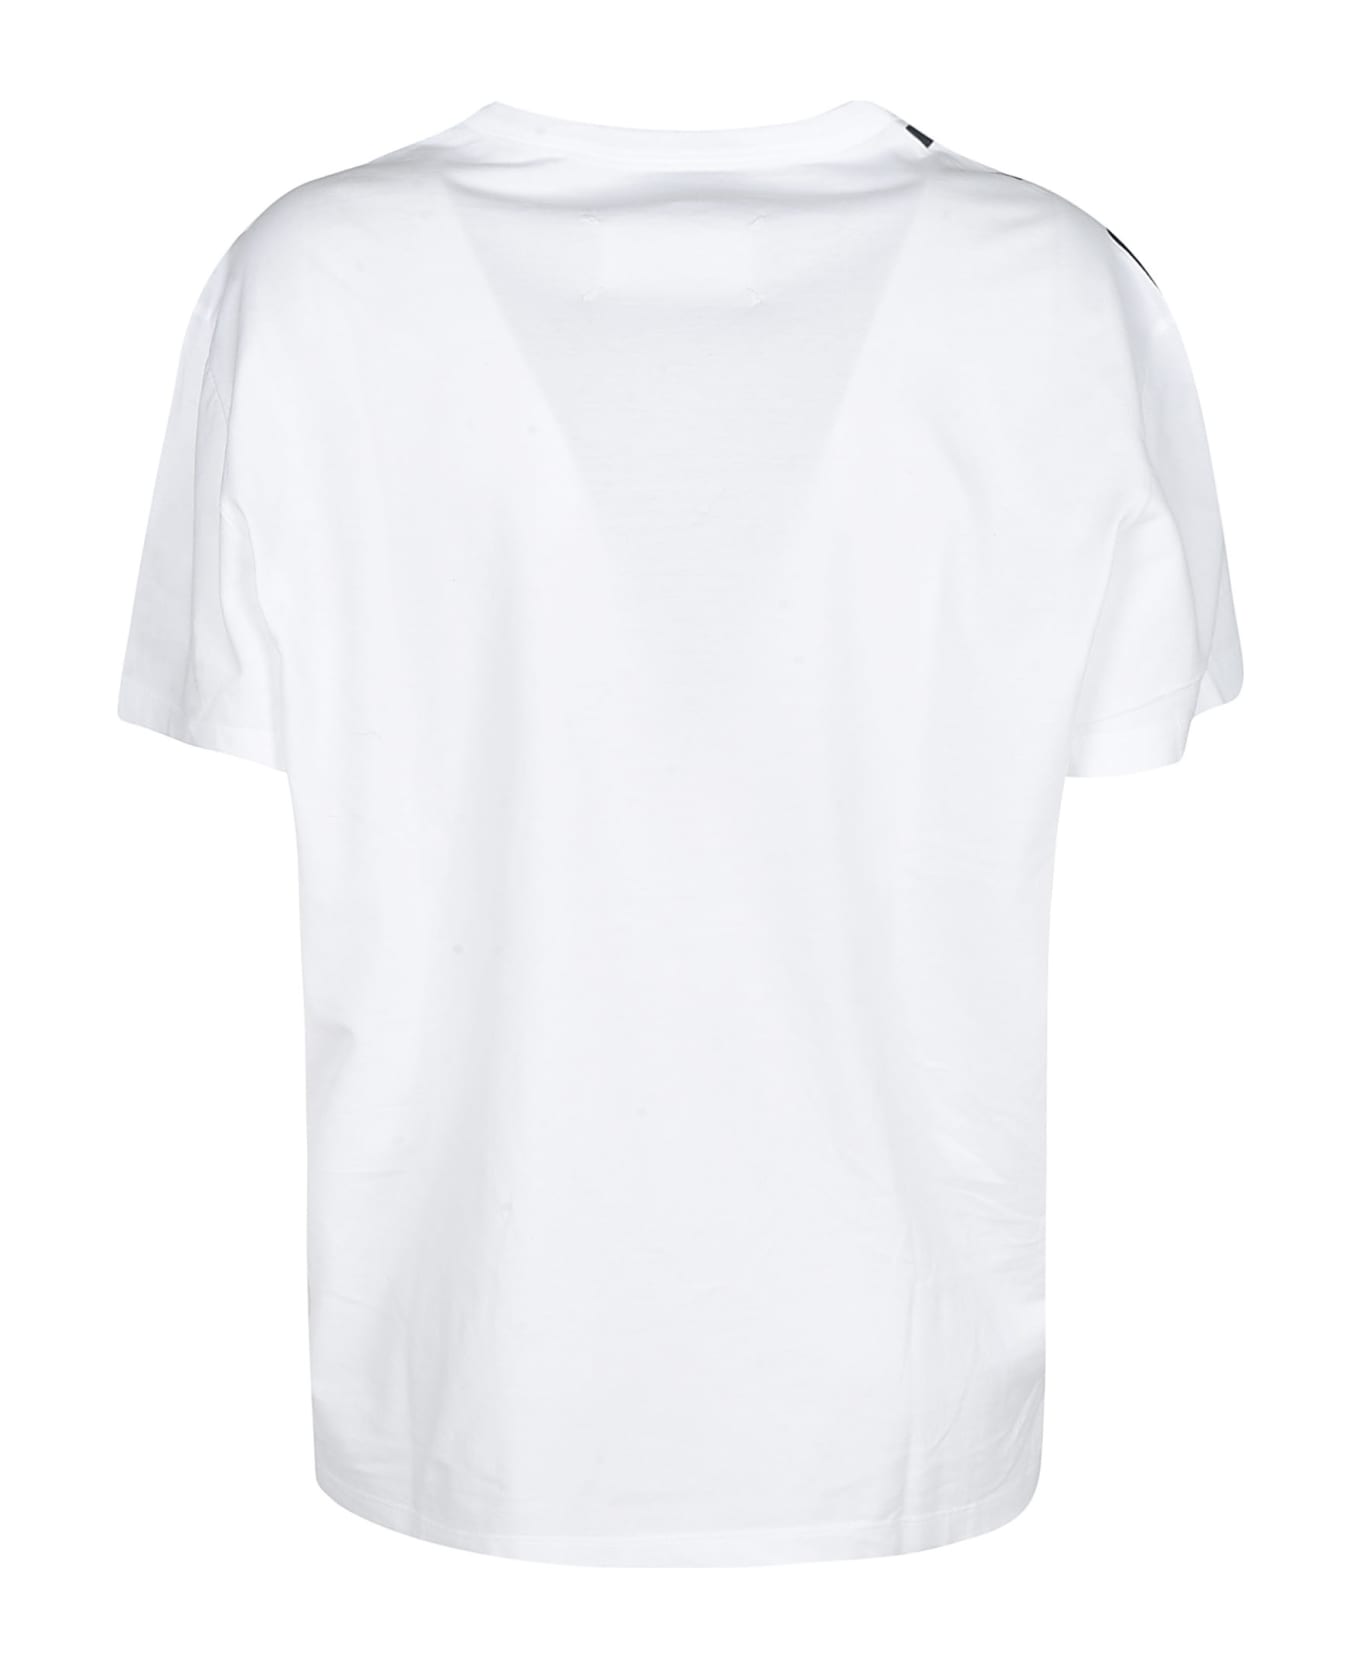 Maison Margiela Printed T-shirt - White/Black